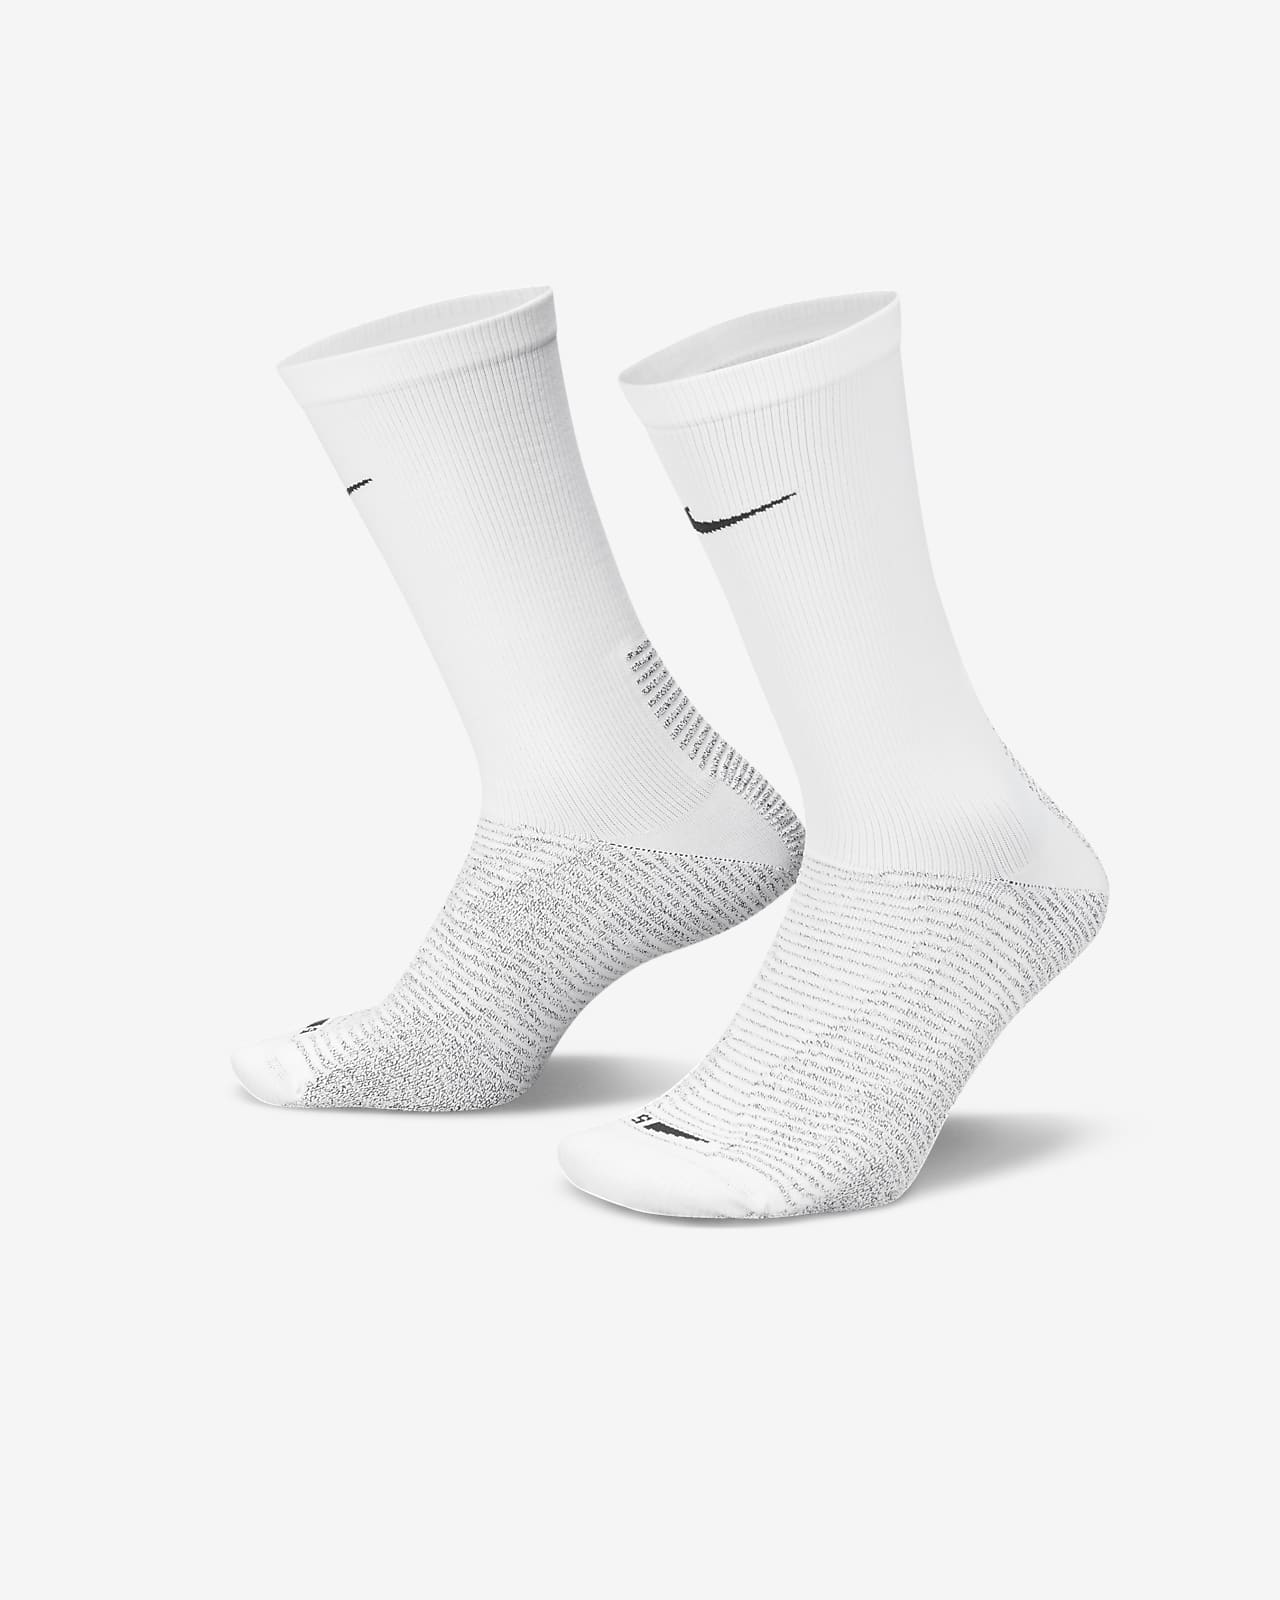 Nike Grip Strike Crew Socks SoccerWorld SoccerWorld, 60% OFF